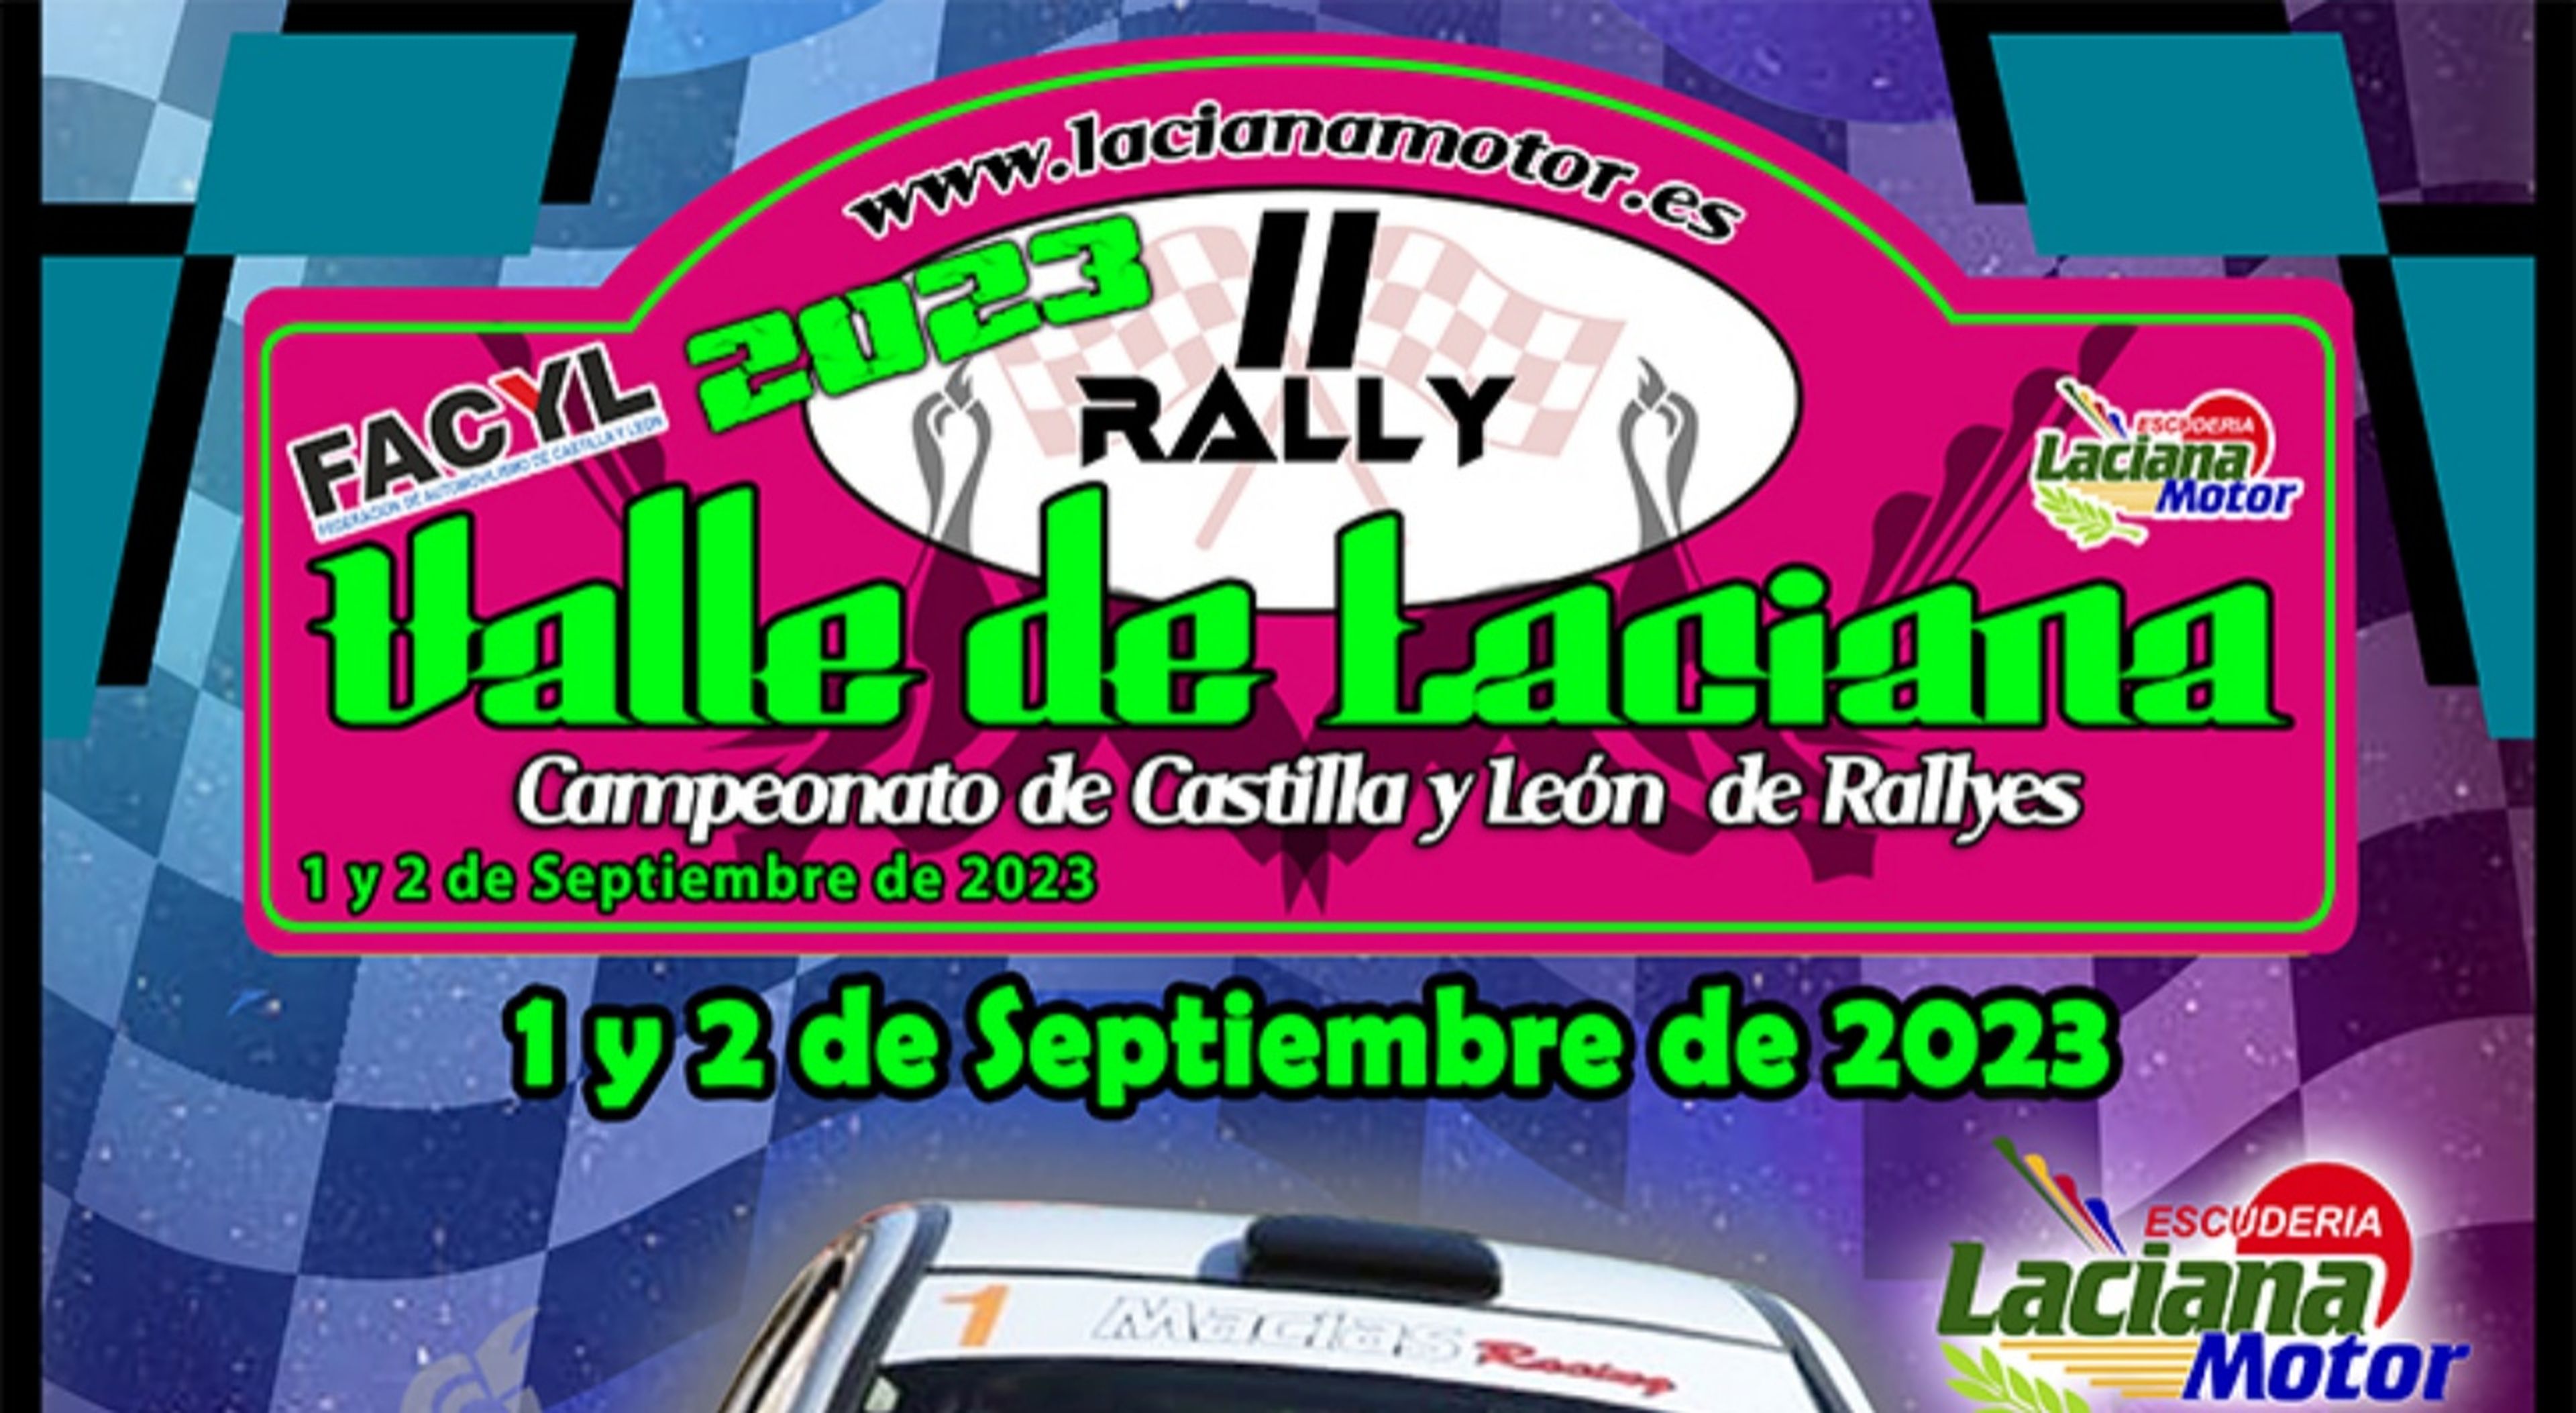 Rally Valle Laciana cartel